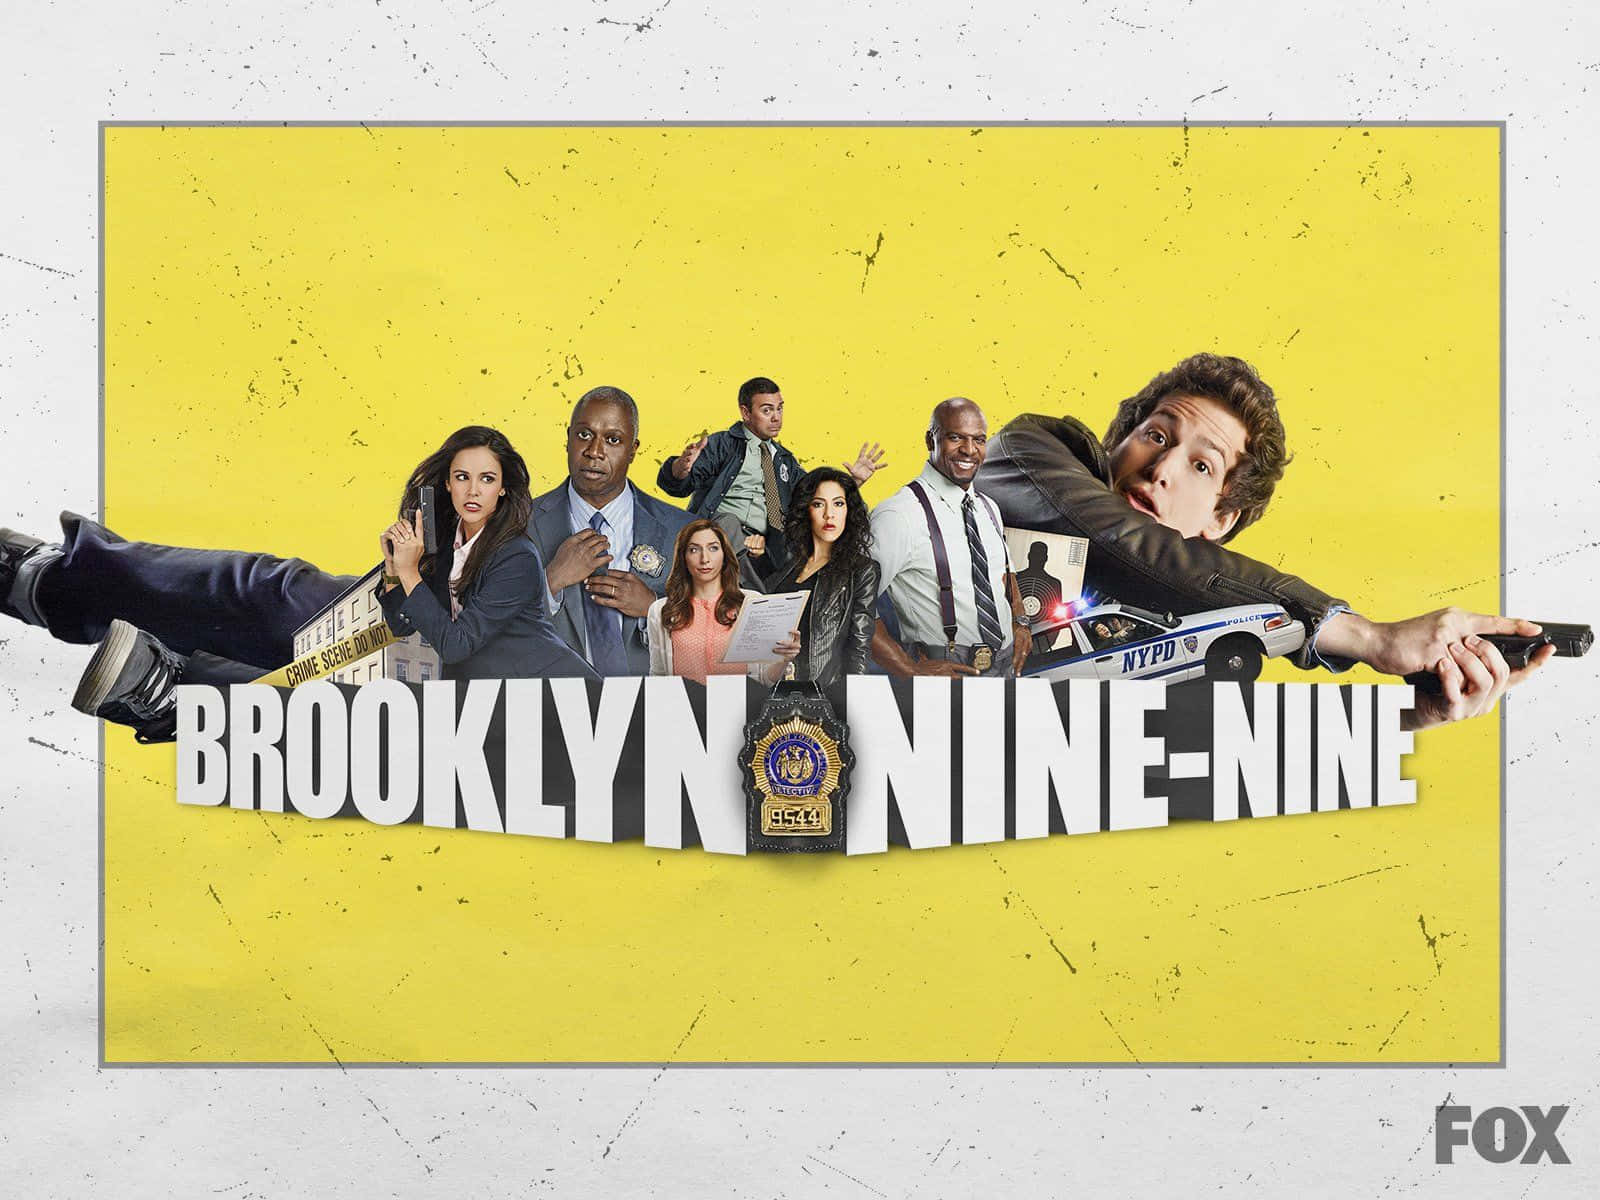 Lasquadra Brooklyn Nine Nine Pronta Per L'azione